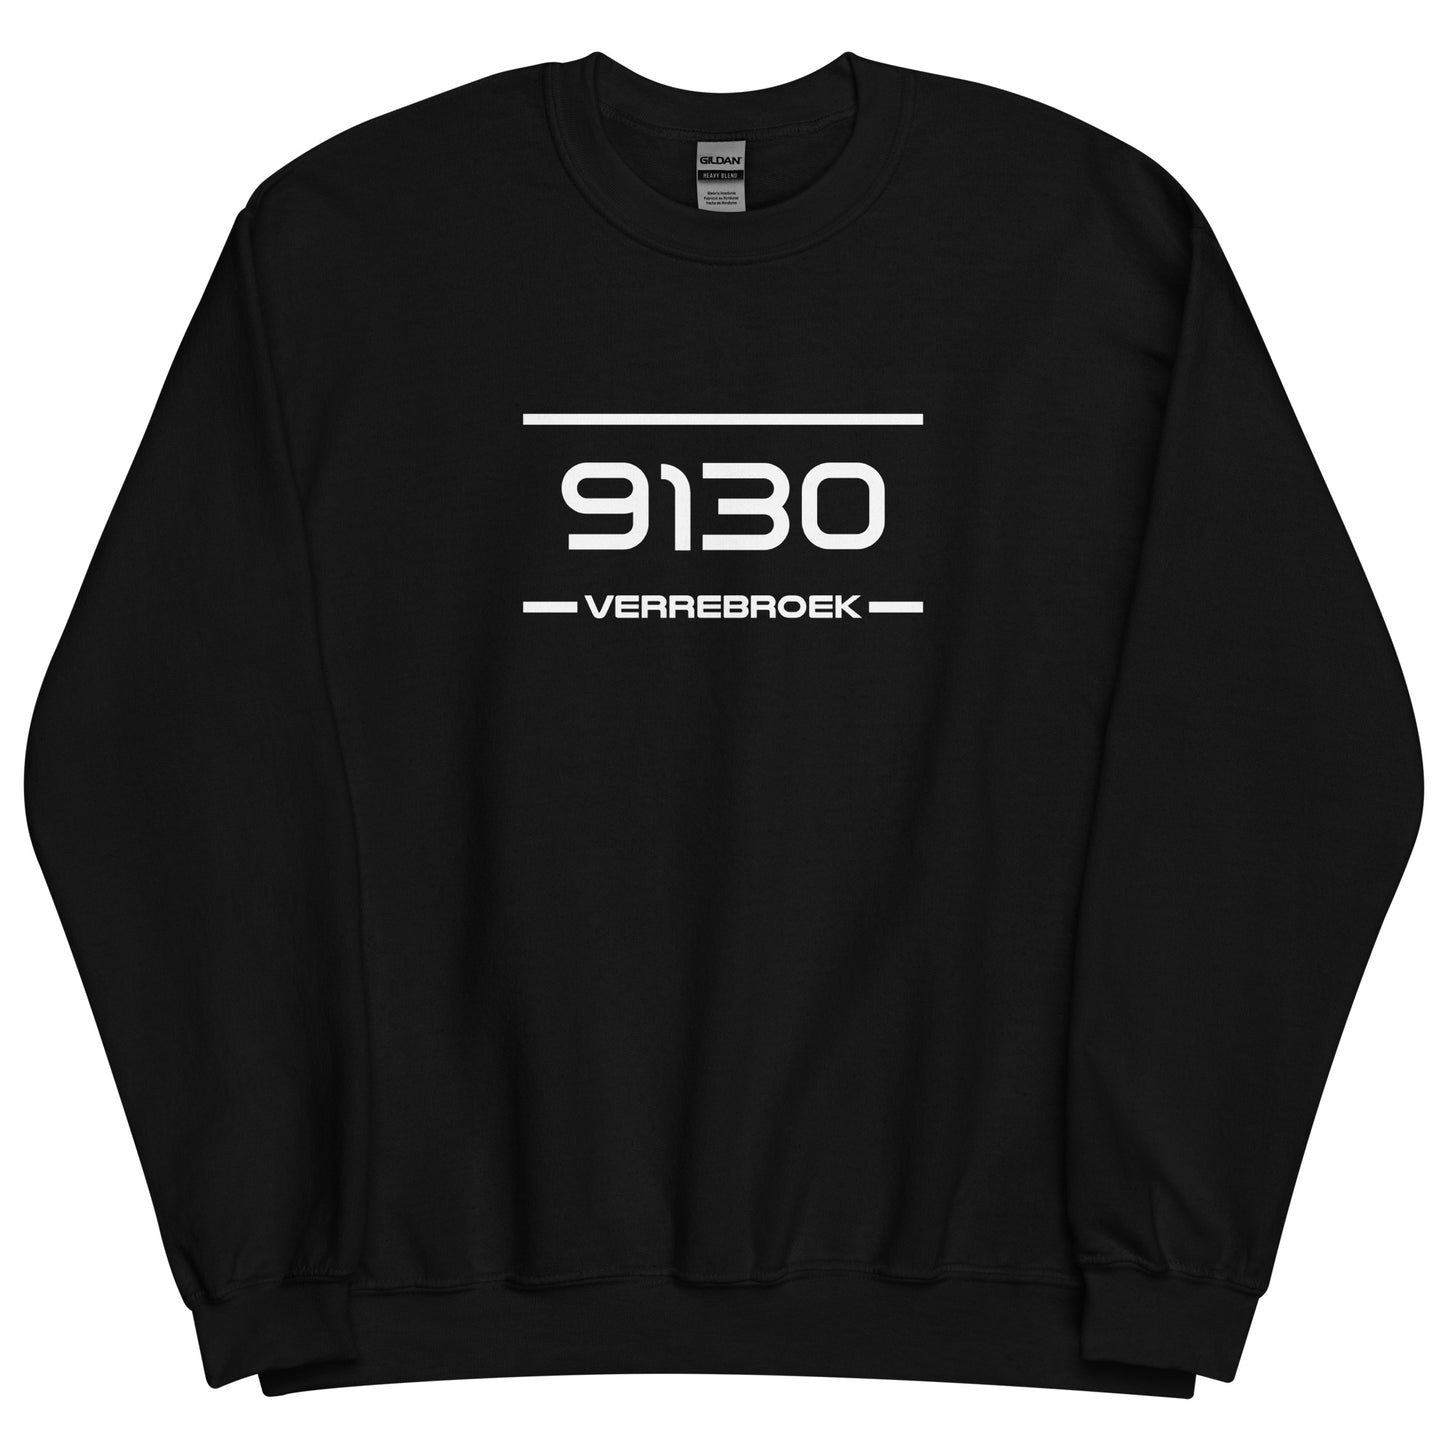 Sweater - 9130 - Verrebroek (M/V)